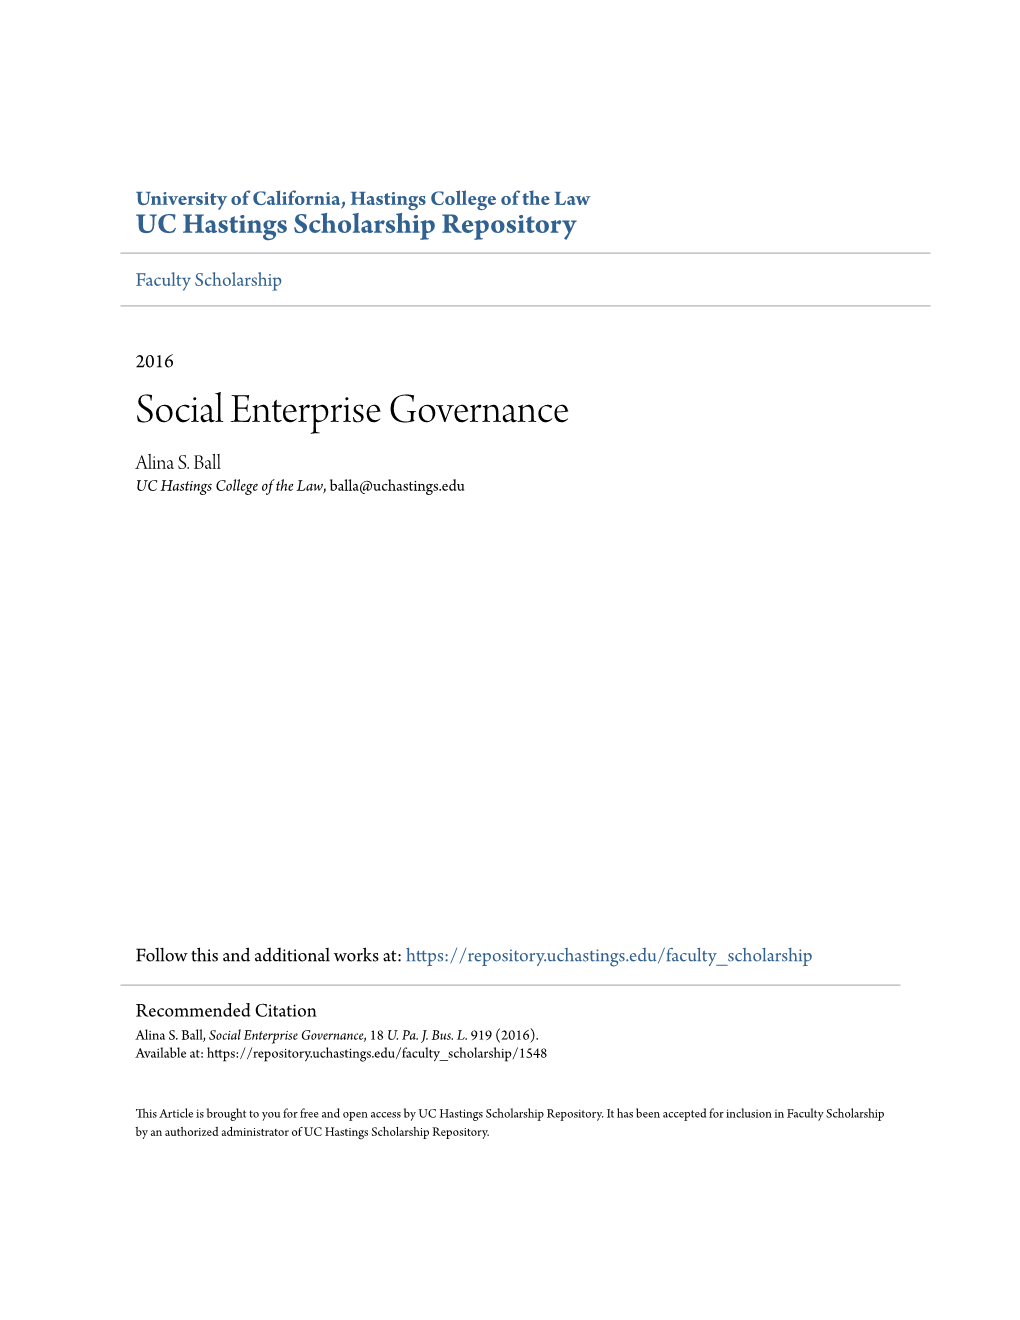 Social Enterprise Governance Alina S